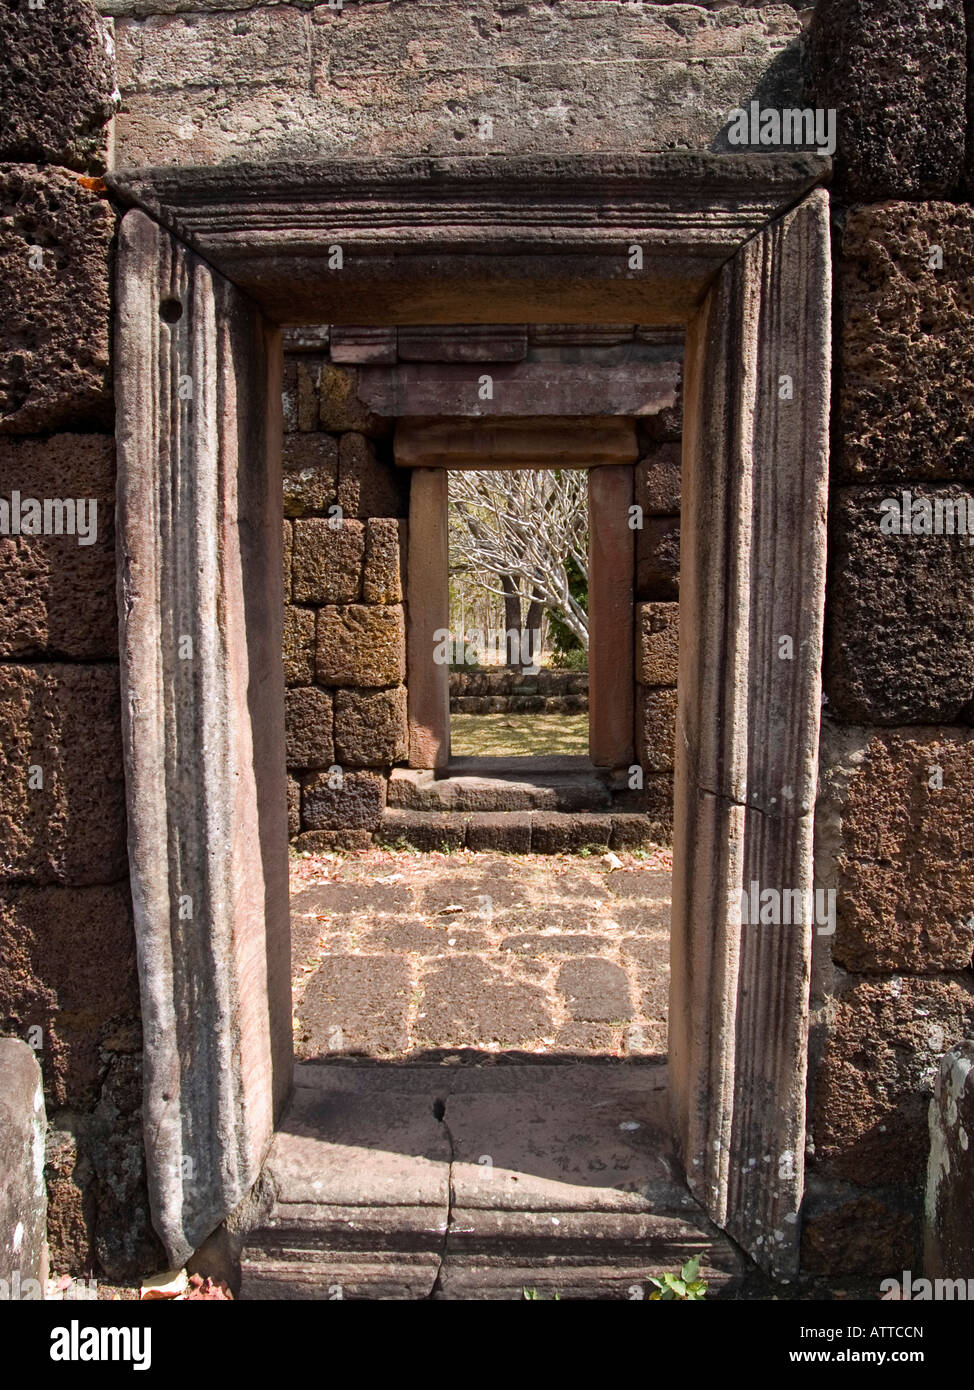 view through ancient windowframe at Phanom Rung Khmer ruins in Thailand Stock Photo